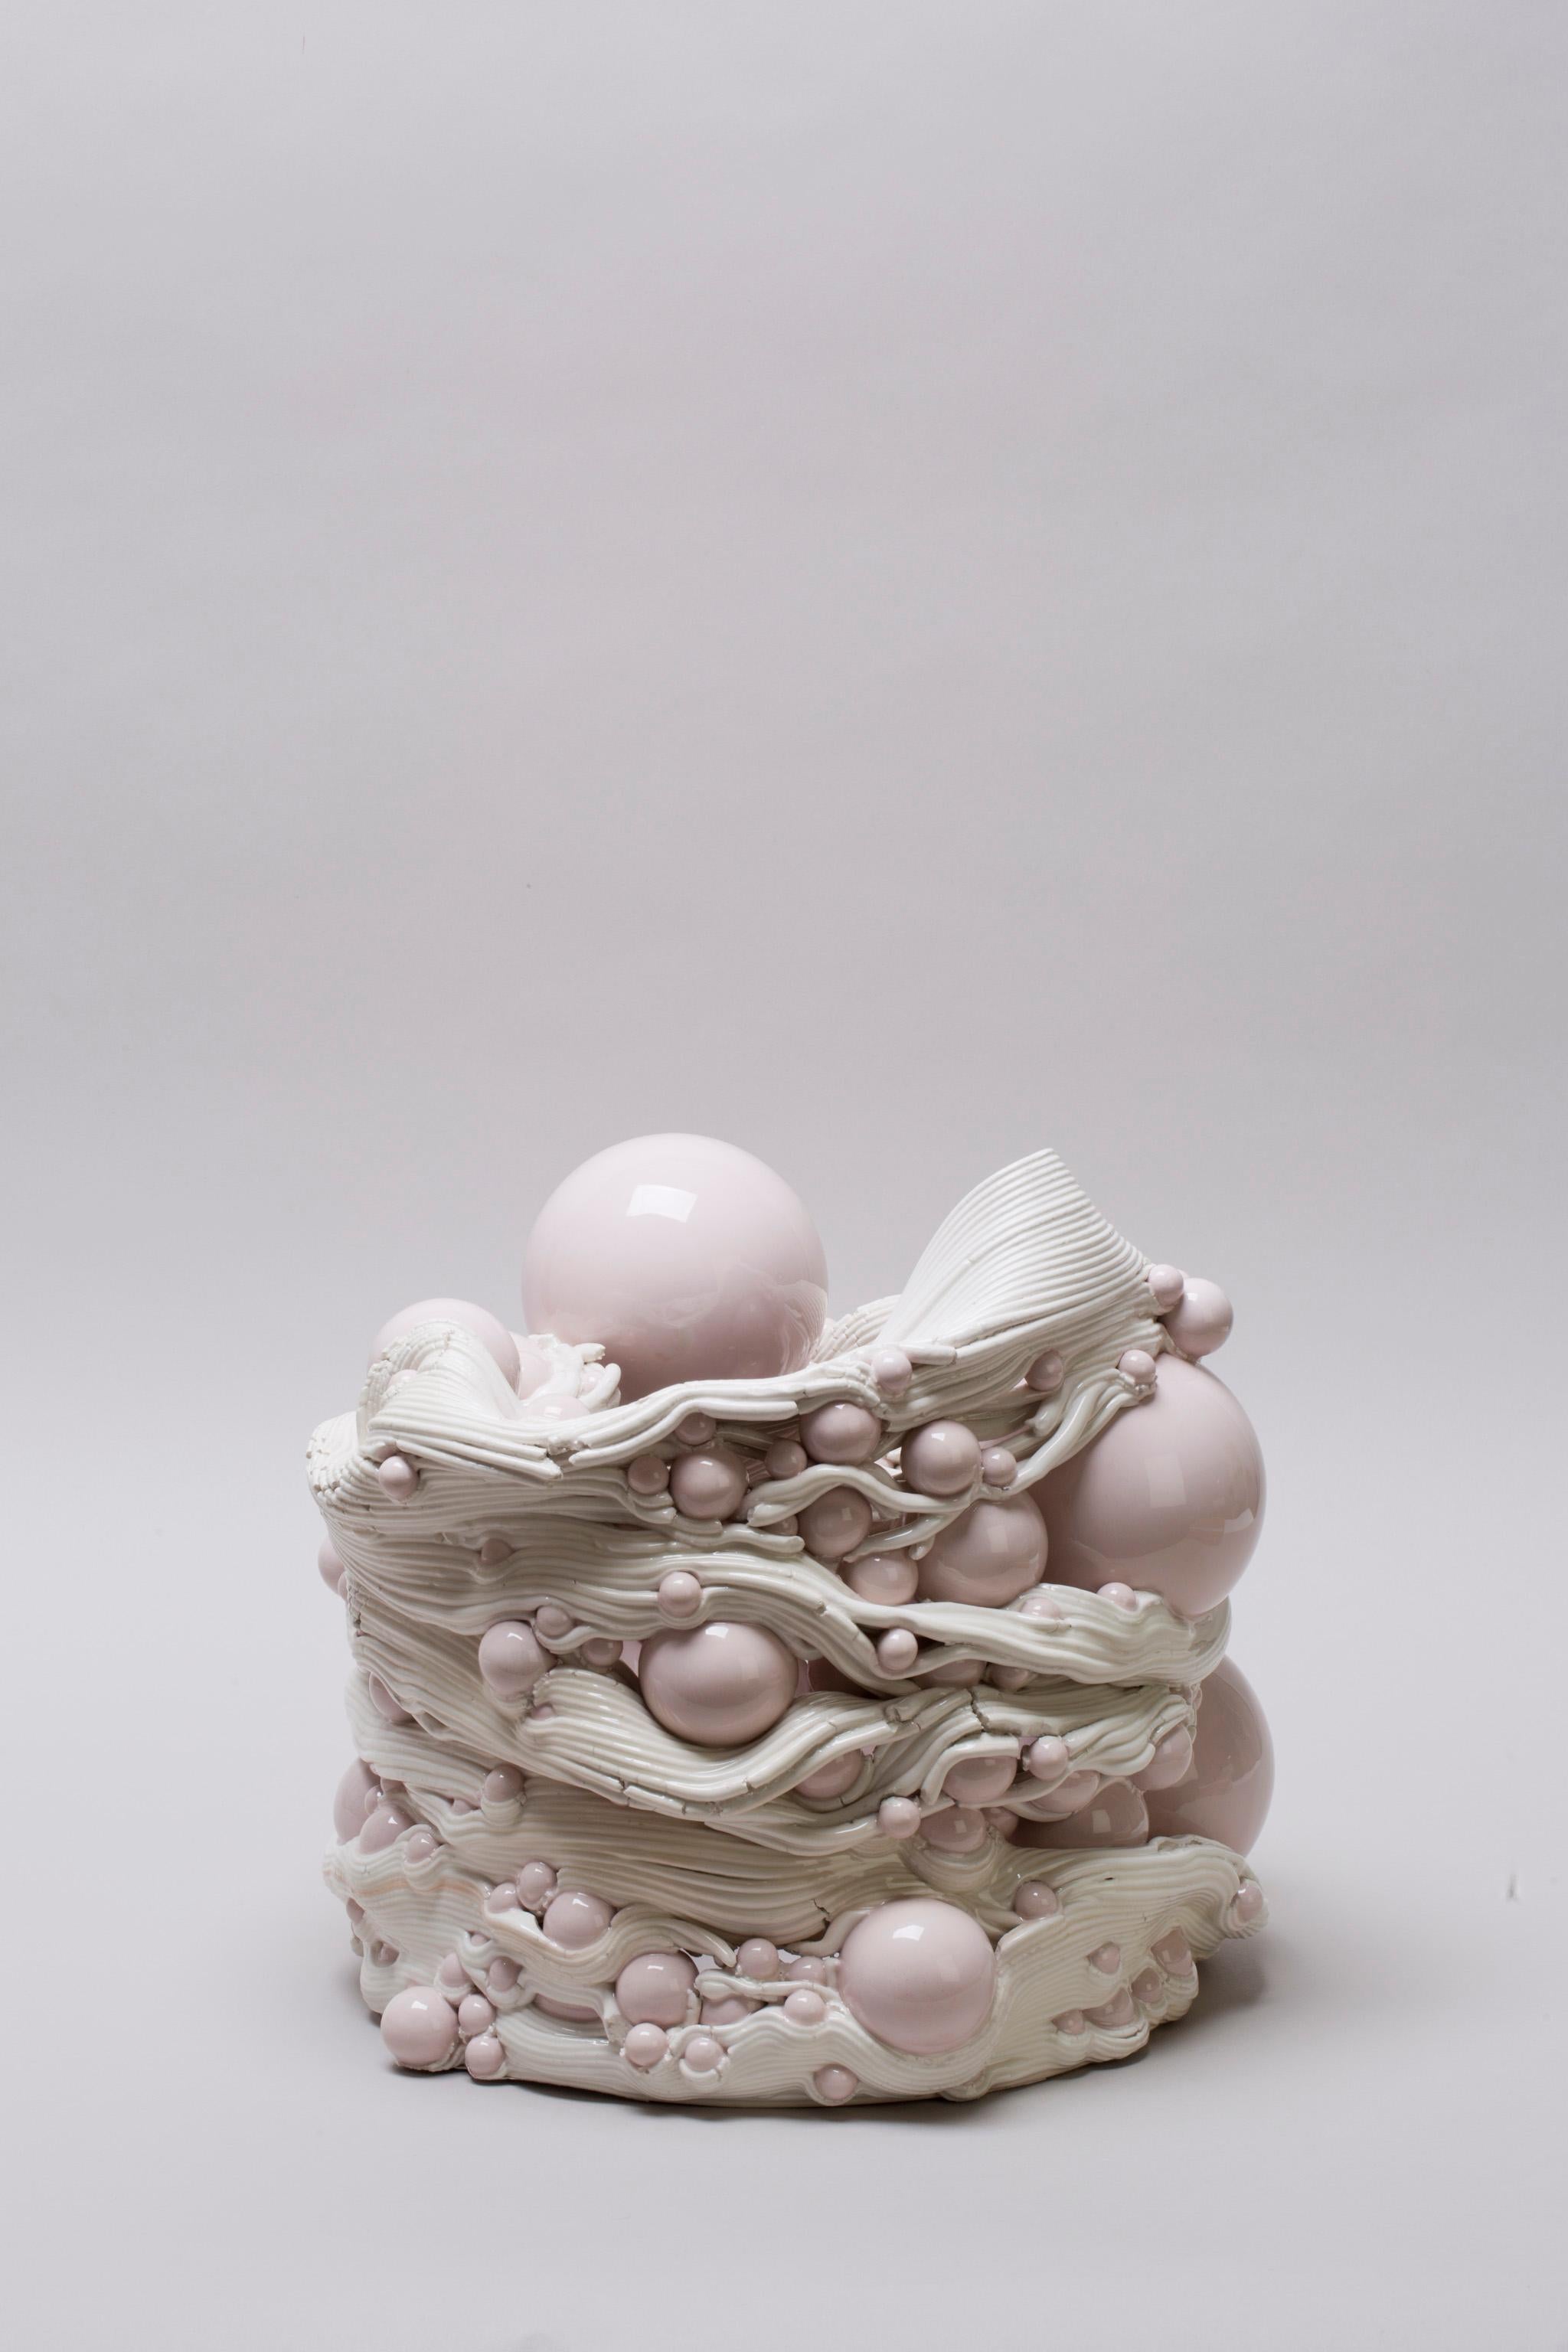 White & Pink Ceramic Sculptural Vase Italian Contemporary, 21st Century 3D Print For Sale 1